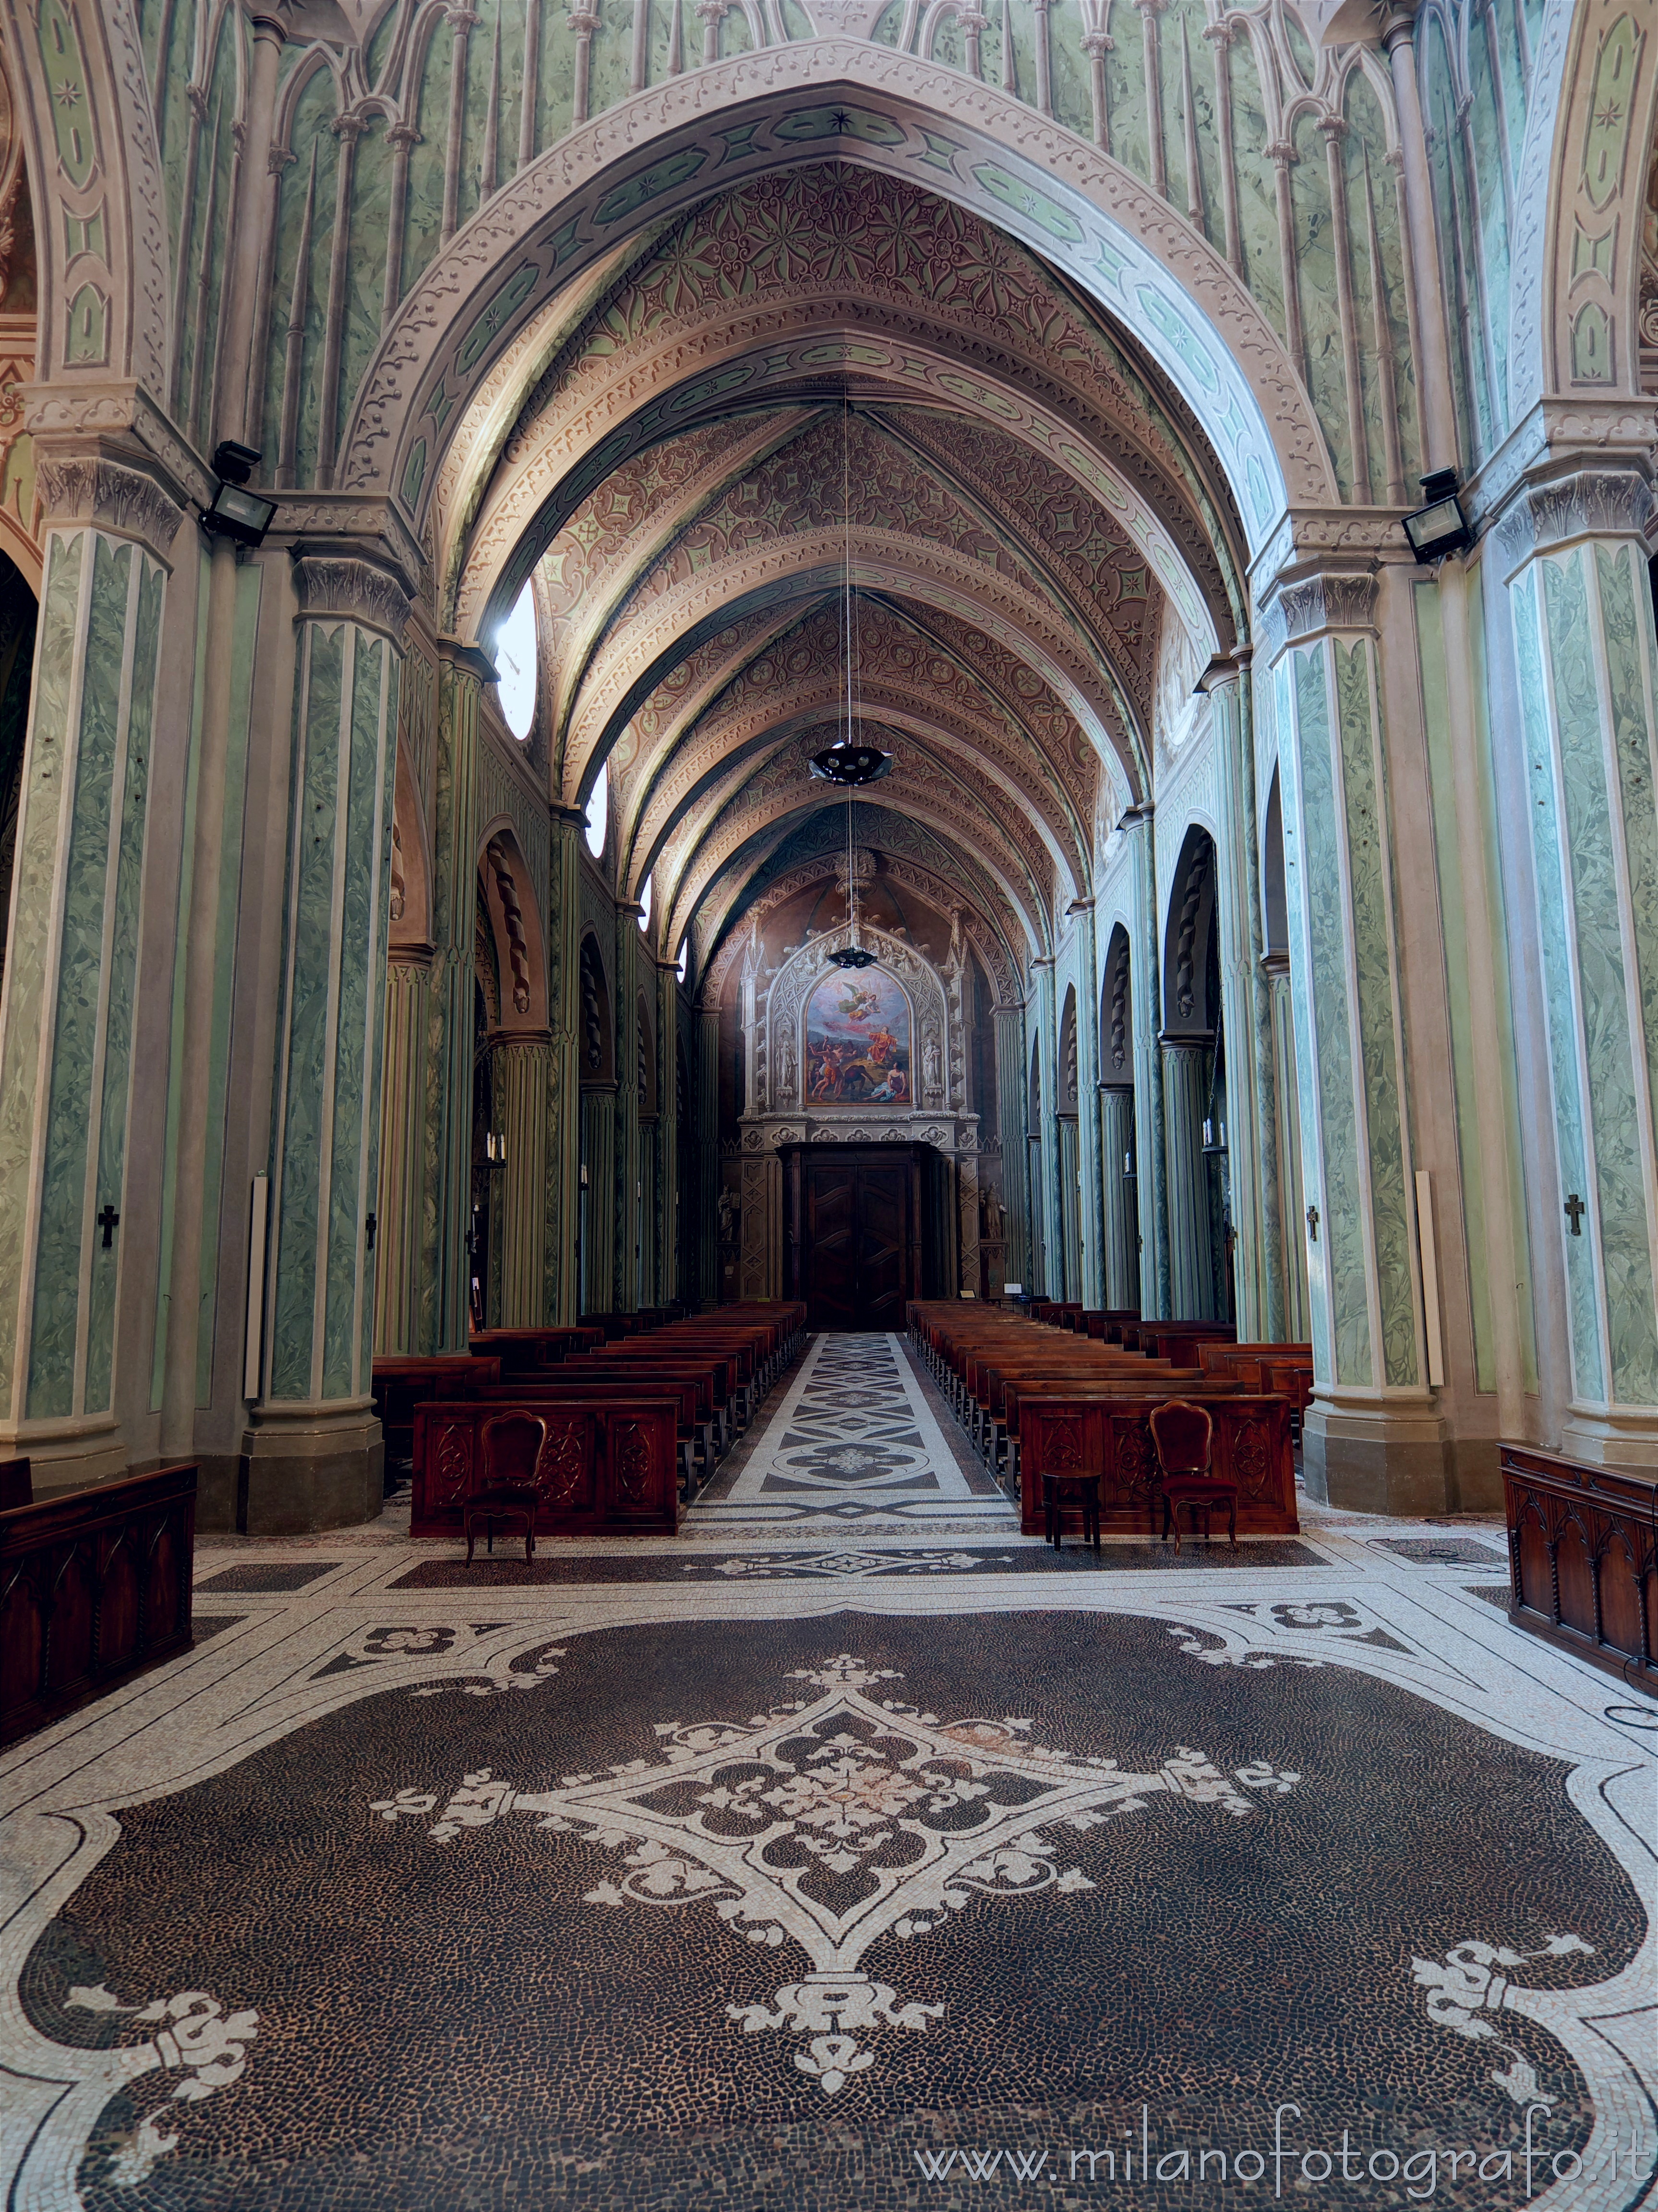 Biella (Italy): Central nave of the Cathedral of Biella - Biella (Italy)